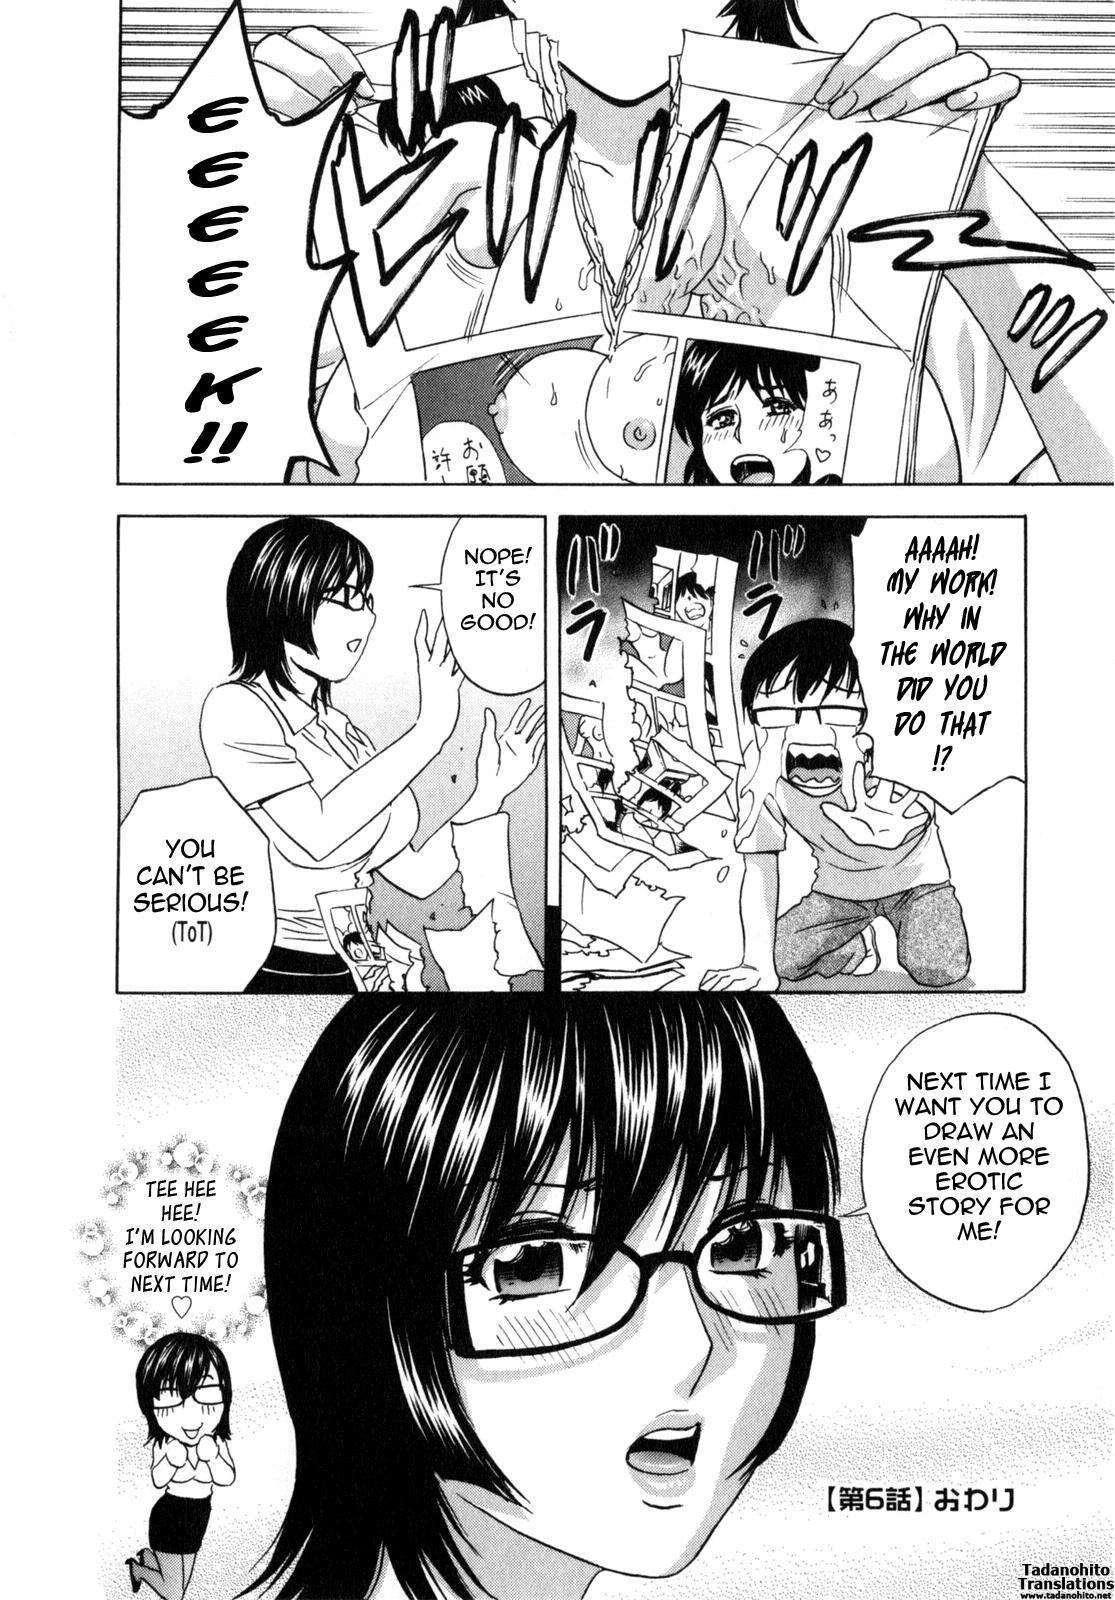 [Hidemaru] Life with Married Women Just Like a Manga 1 - Ch. 1-8 [English] {Tadanohito} 121